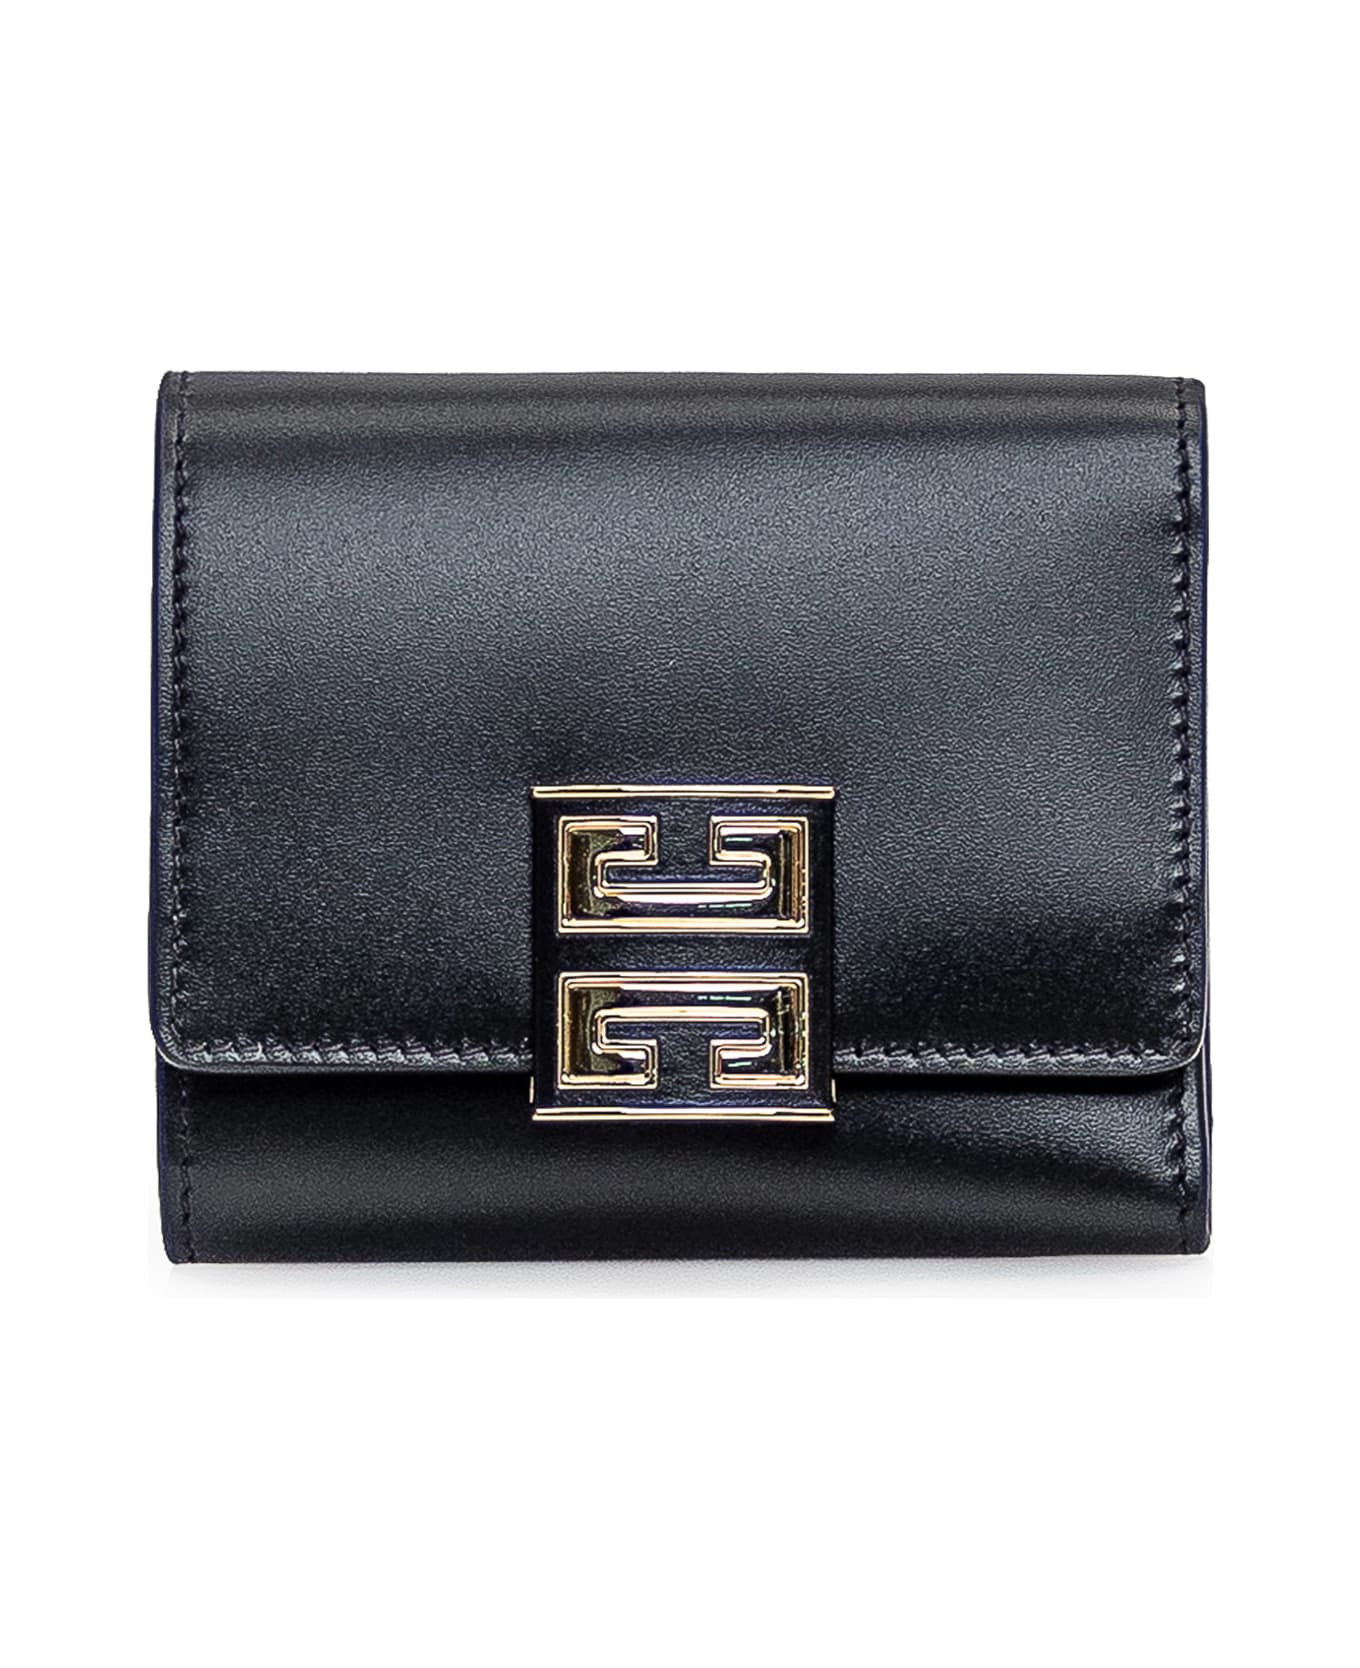 Givenchy 4g Tri-fold Wallet - BLACK 財布